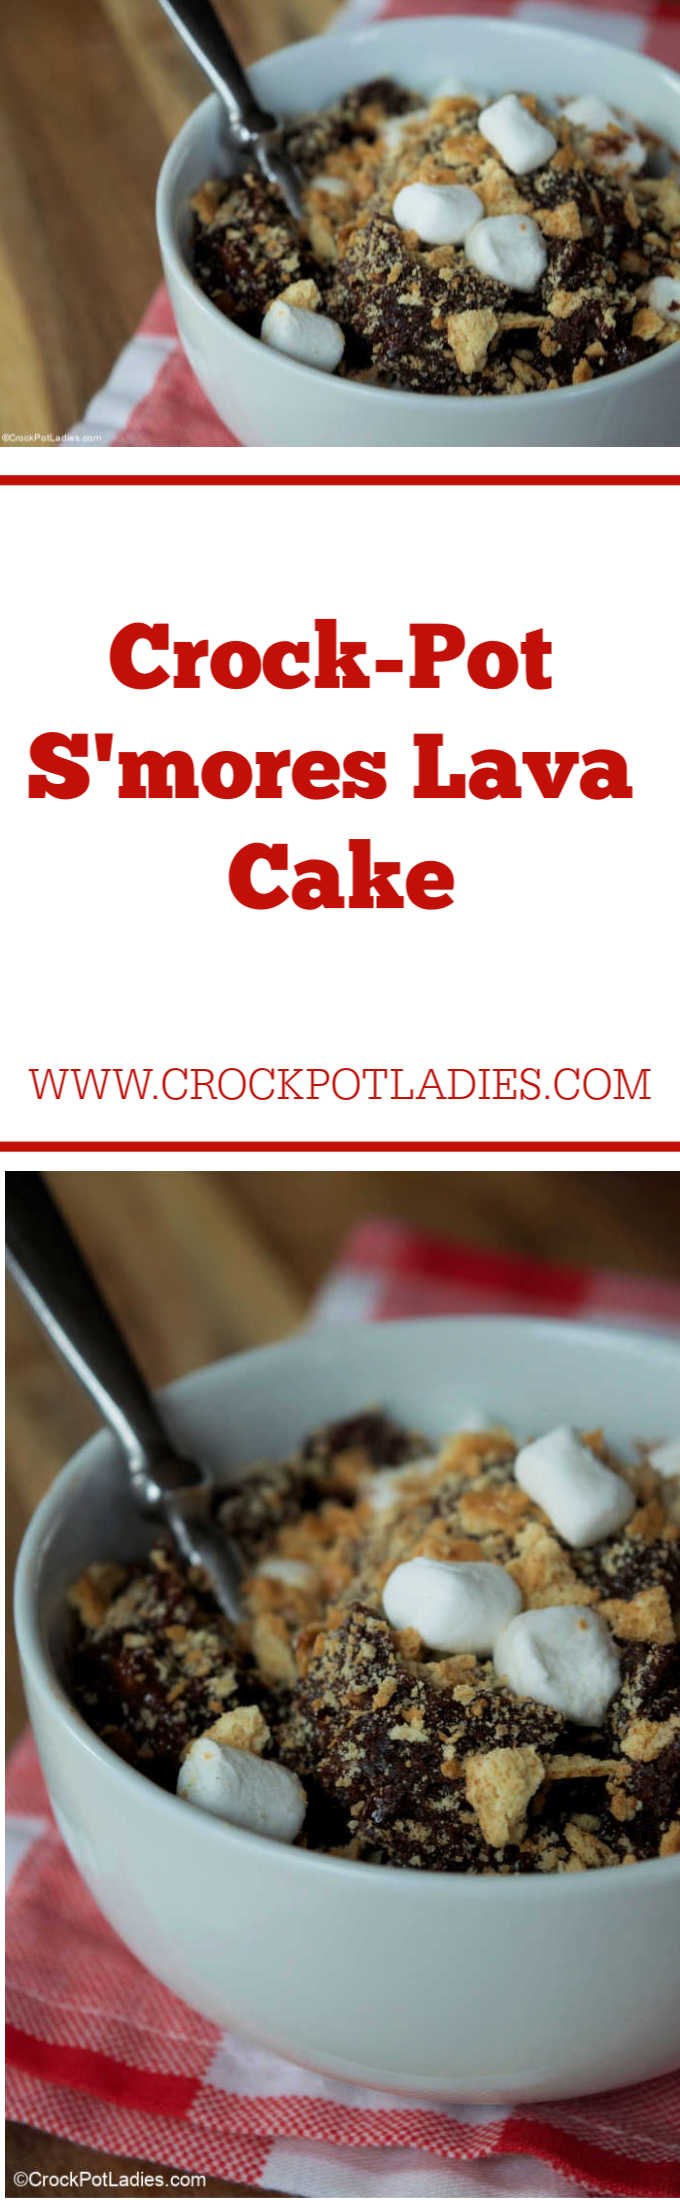 Crock-Pot S'mores Lava Cake